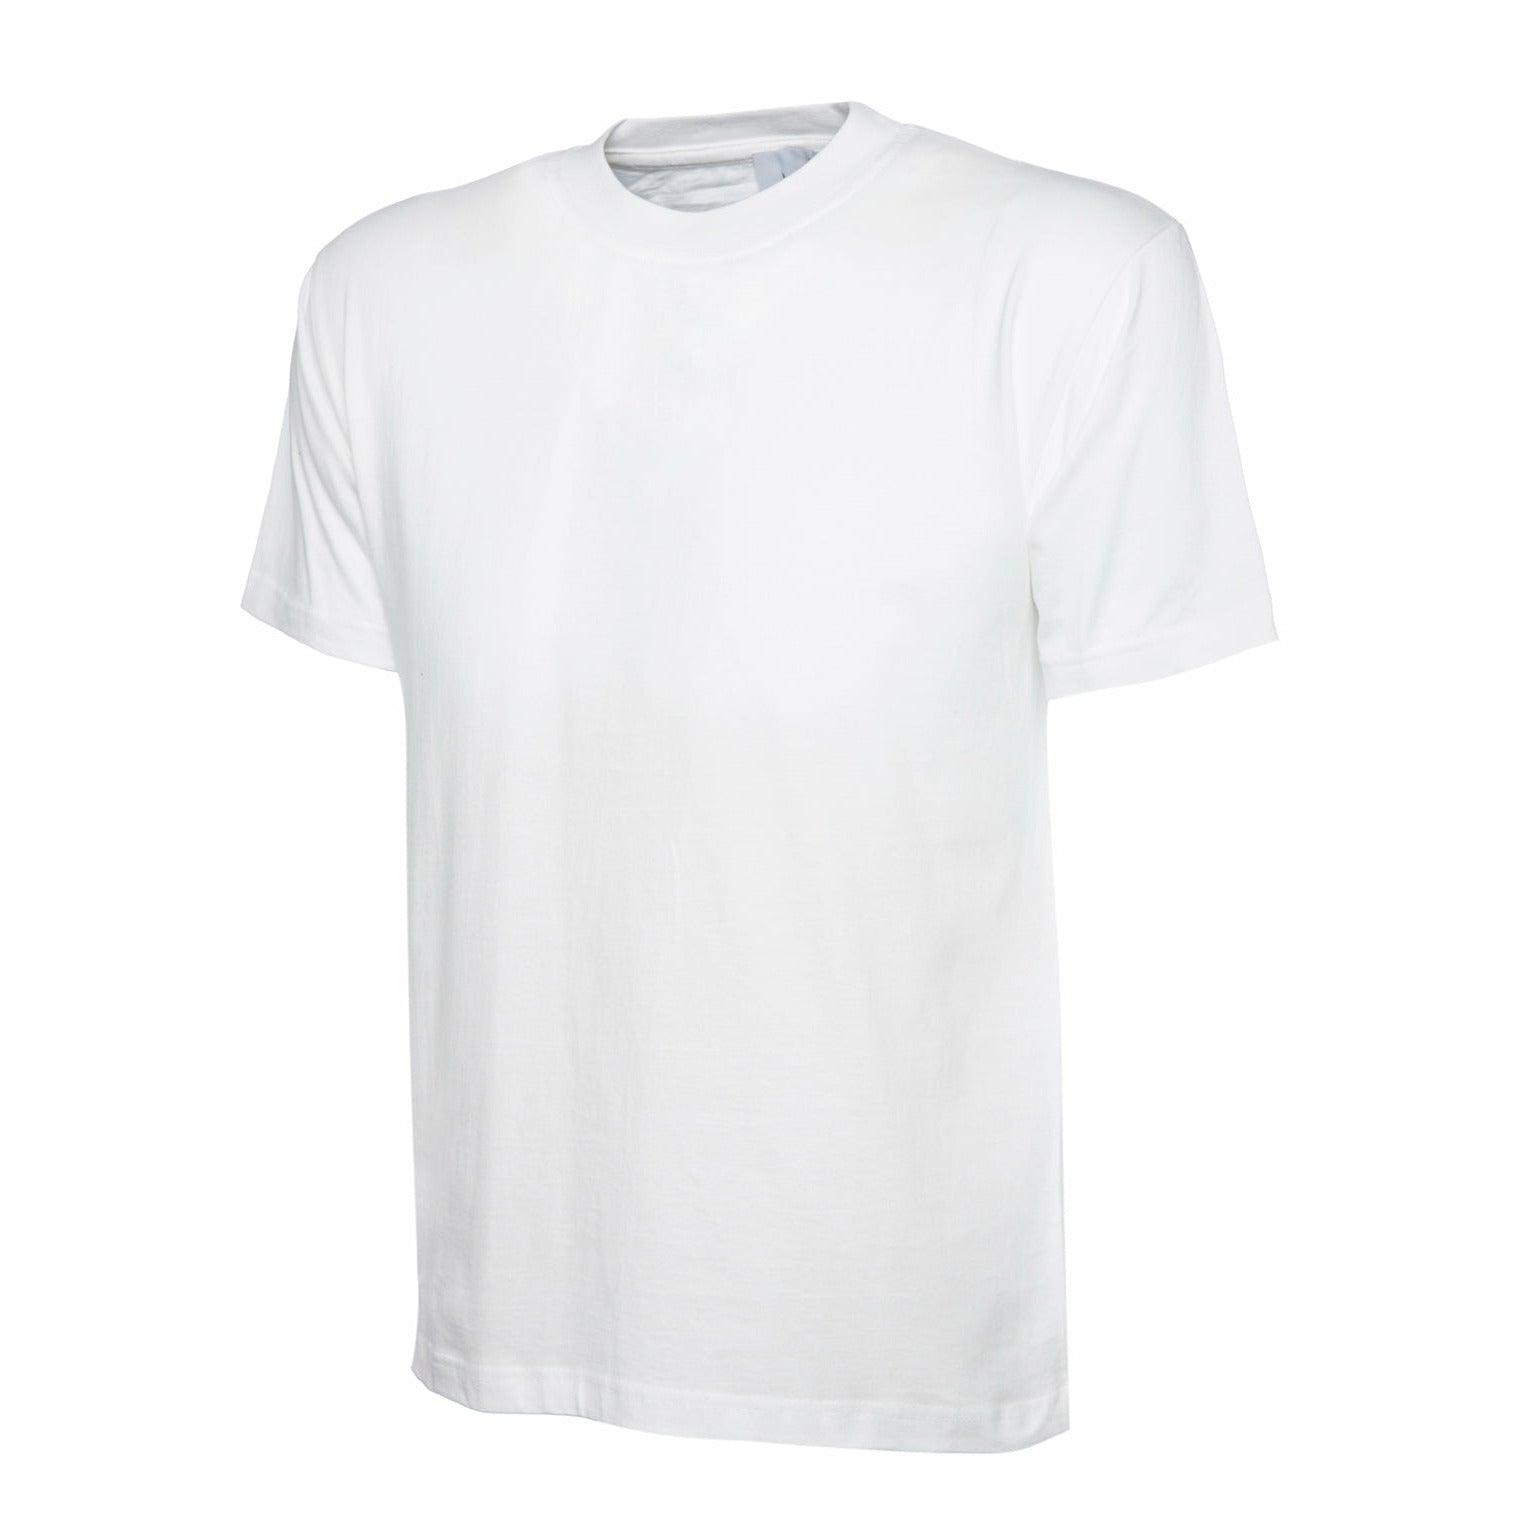 Childrens Classic T-shirt White